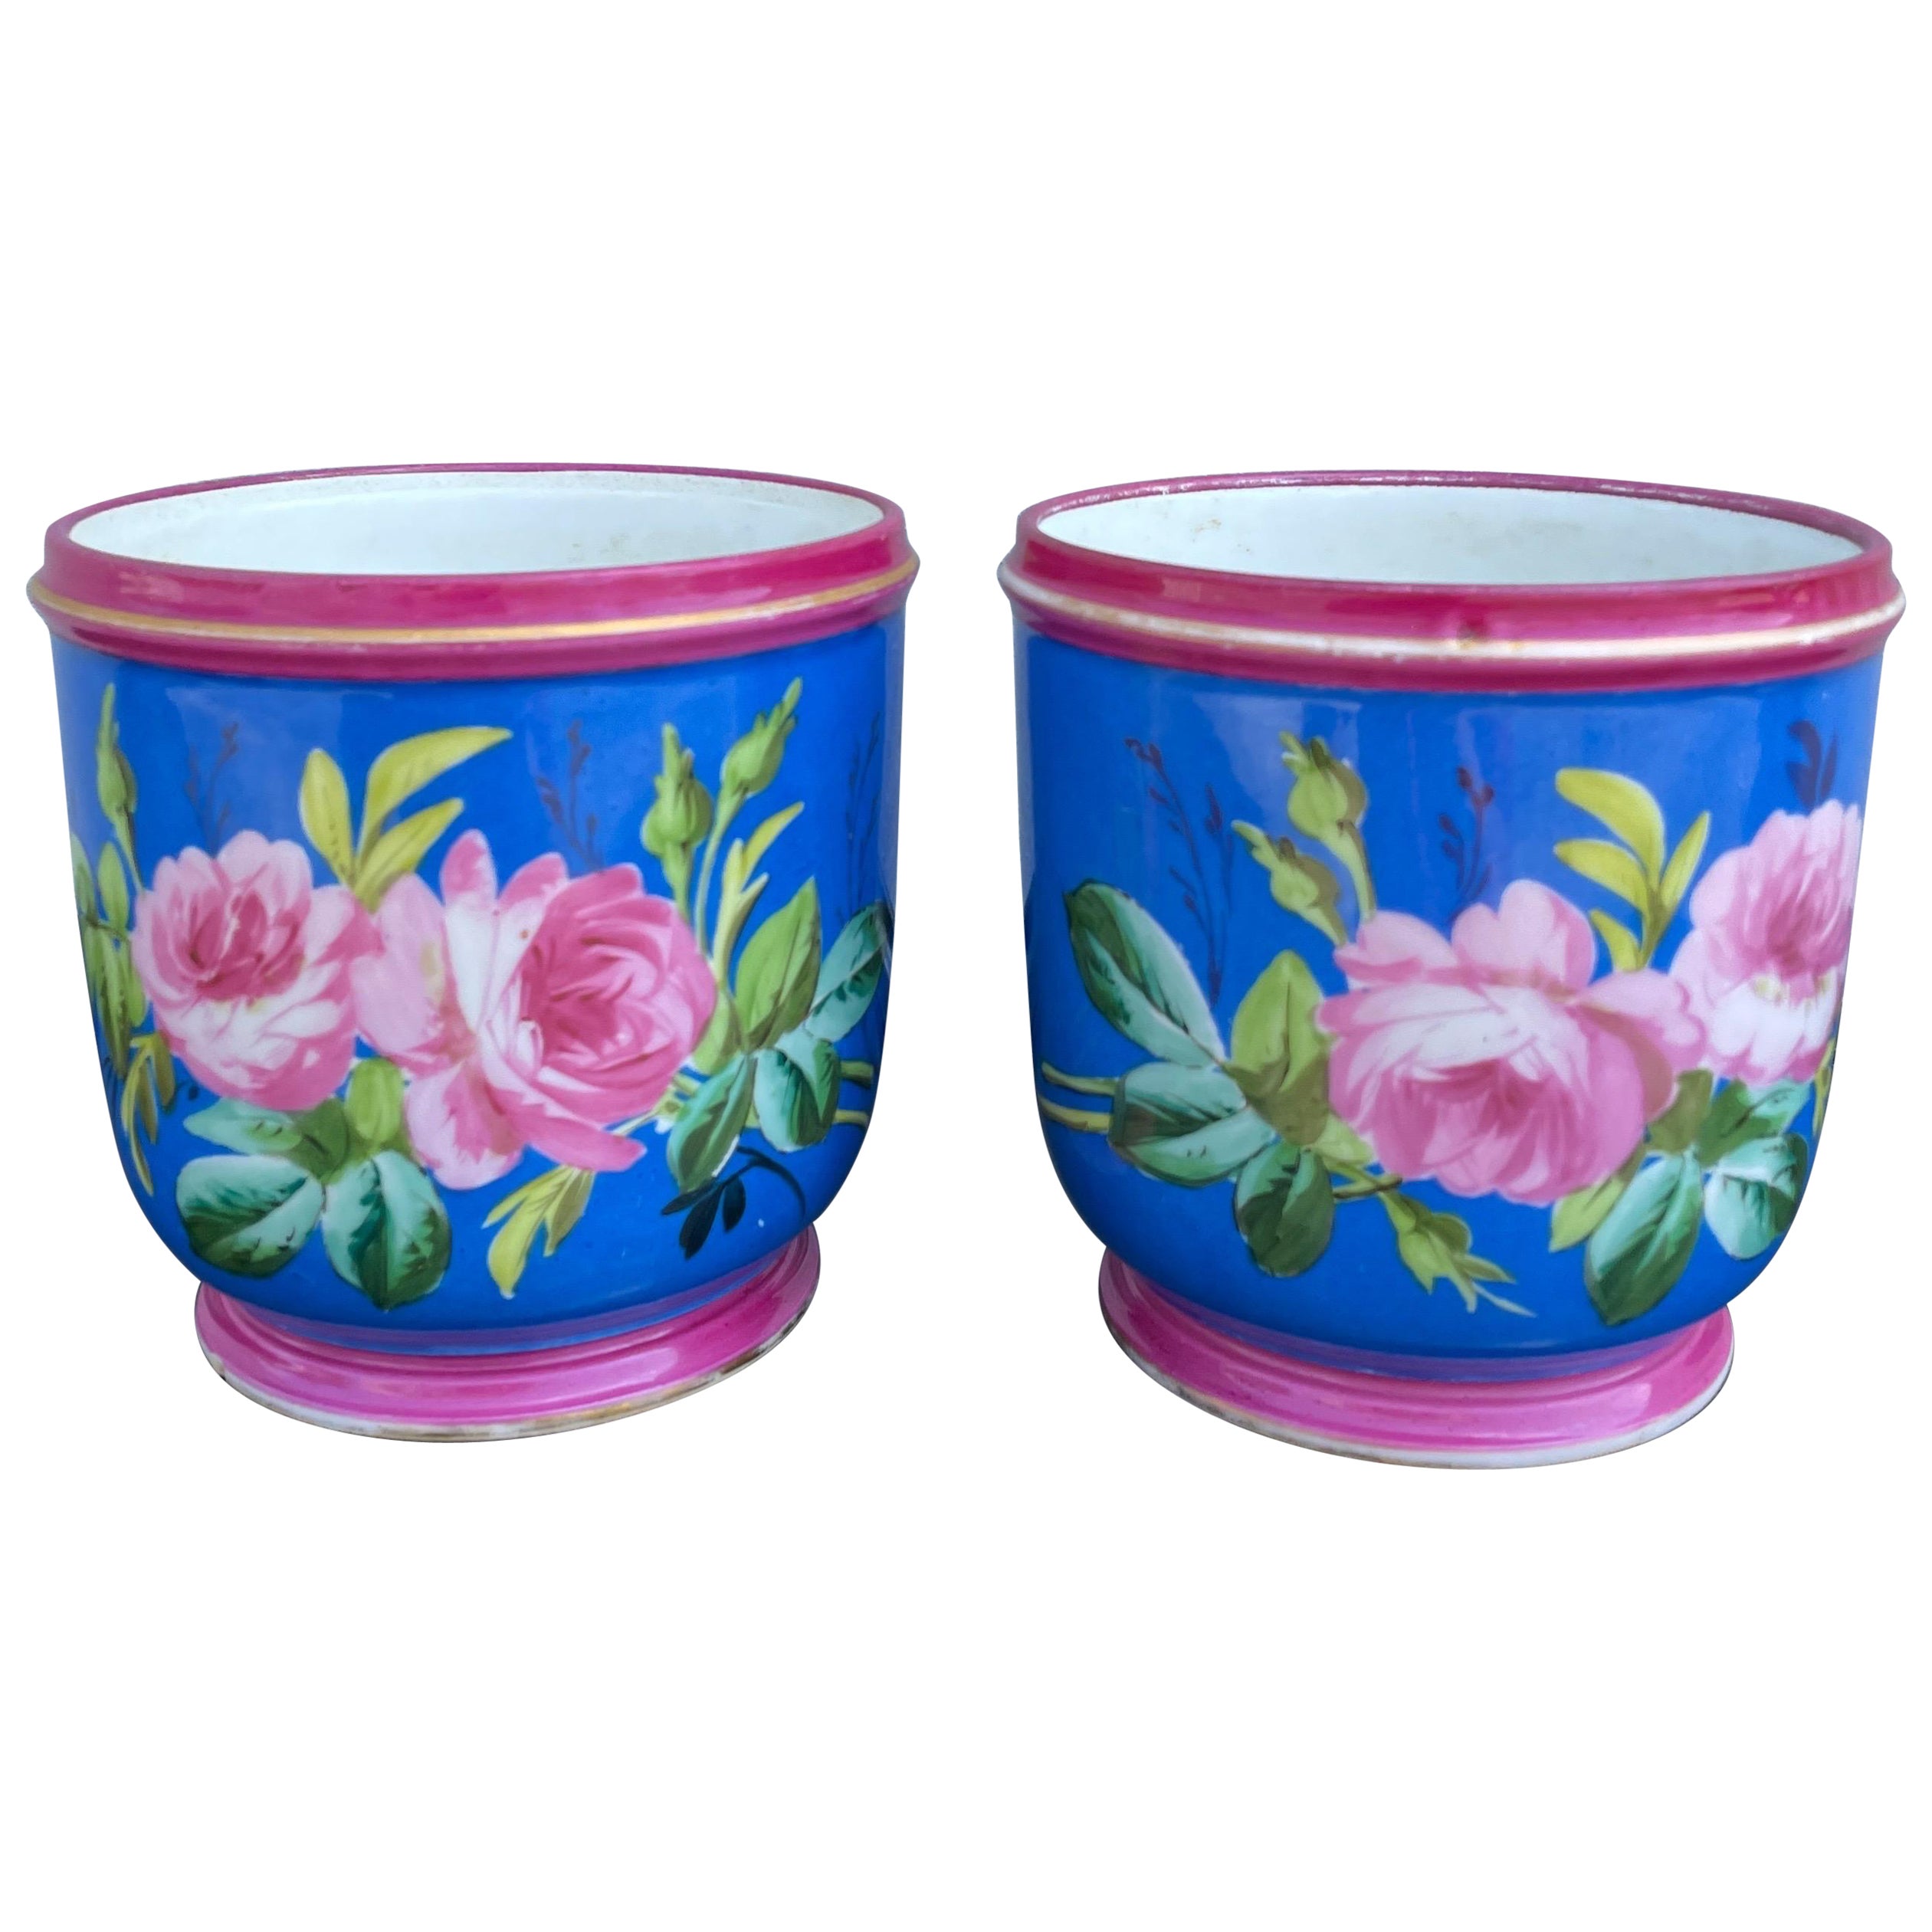 Pair of Antique Paris Porcelain Cachepots with Pink Peonies For Sale